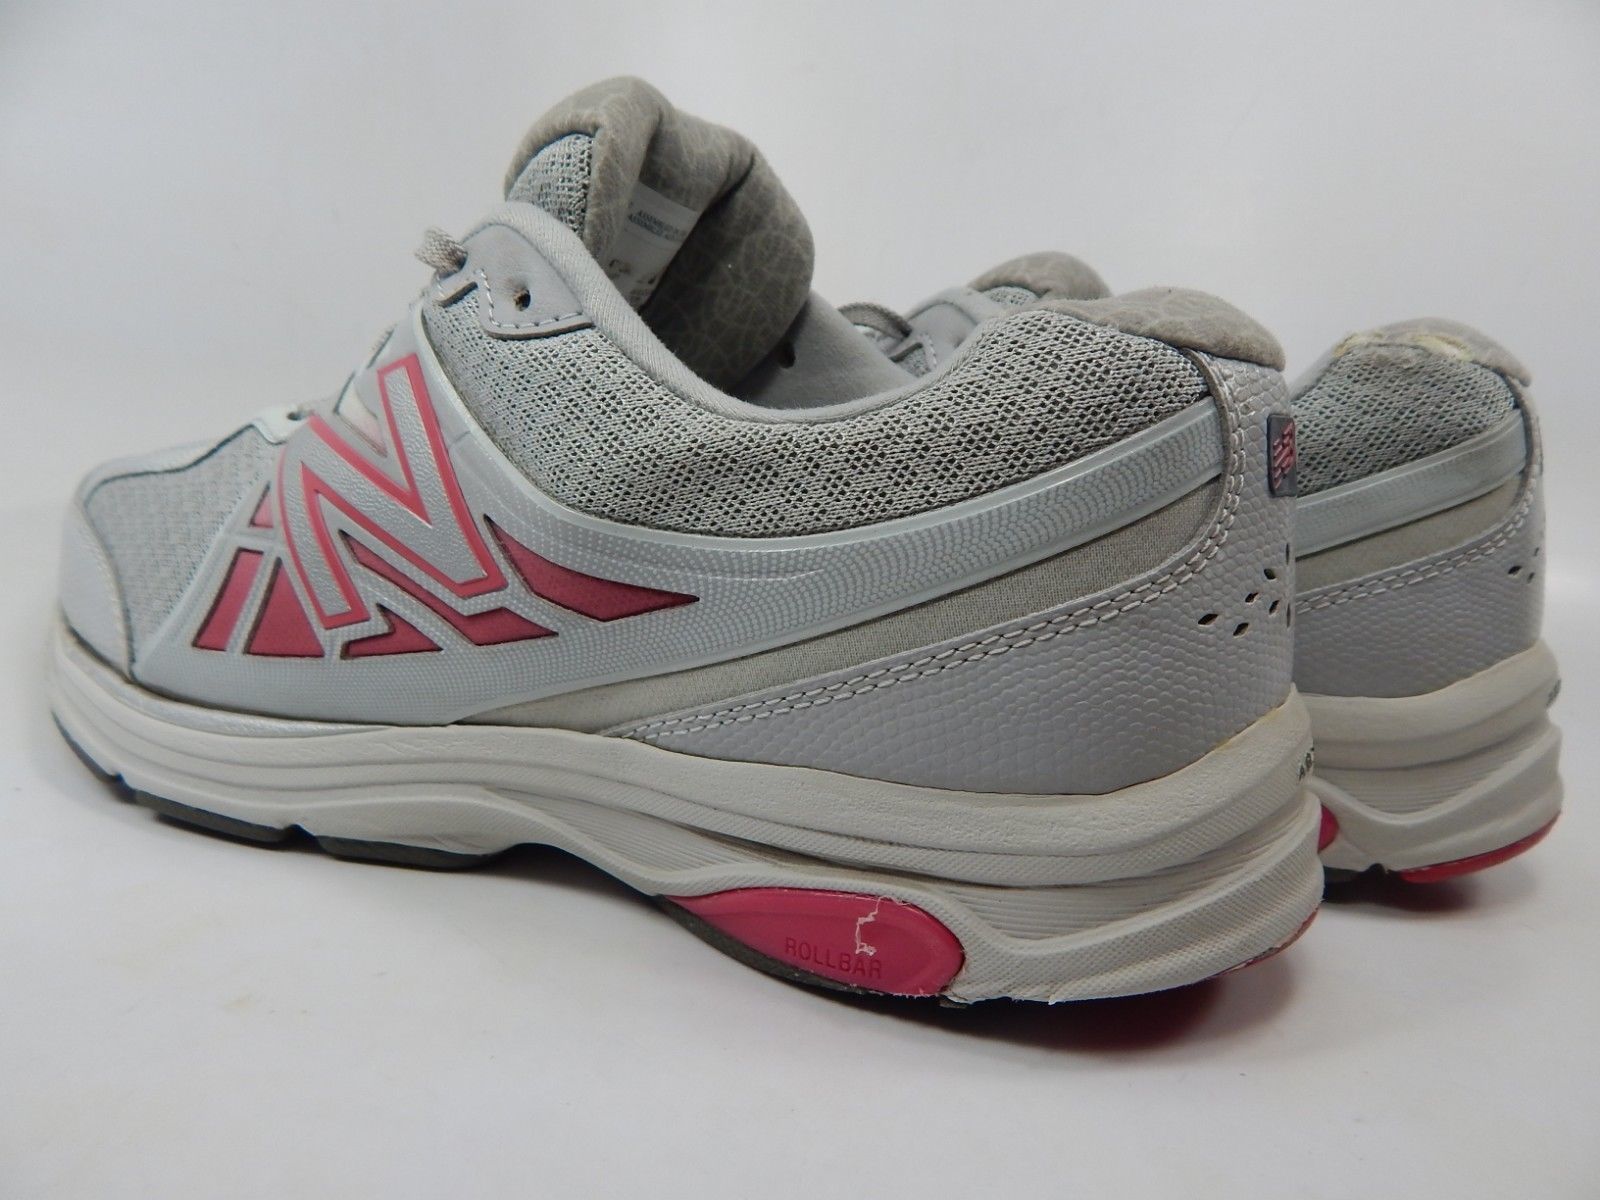 New Balance 847 v2 Size US 9.5 M (B) EU 41 Women's Walking Shoes Gray ...